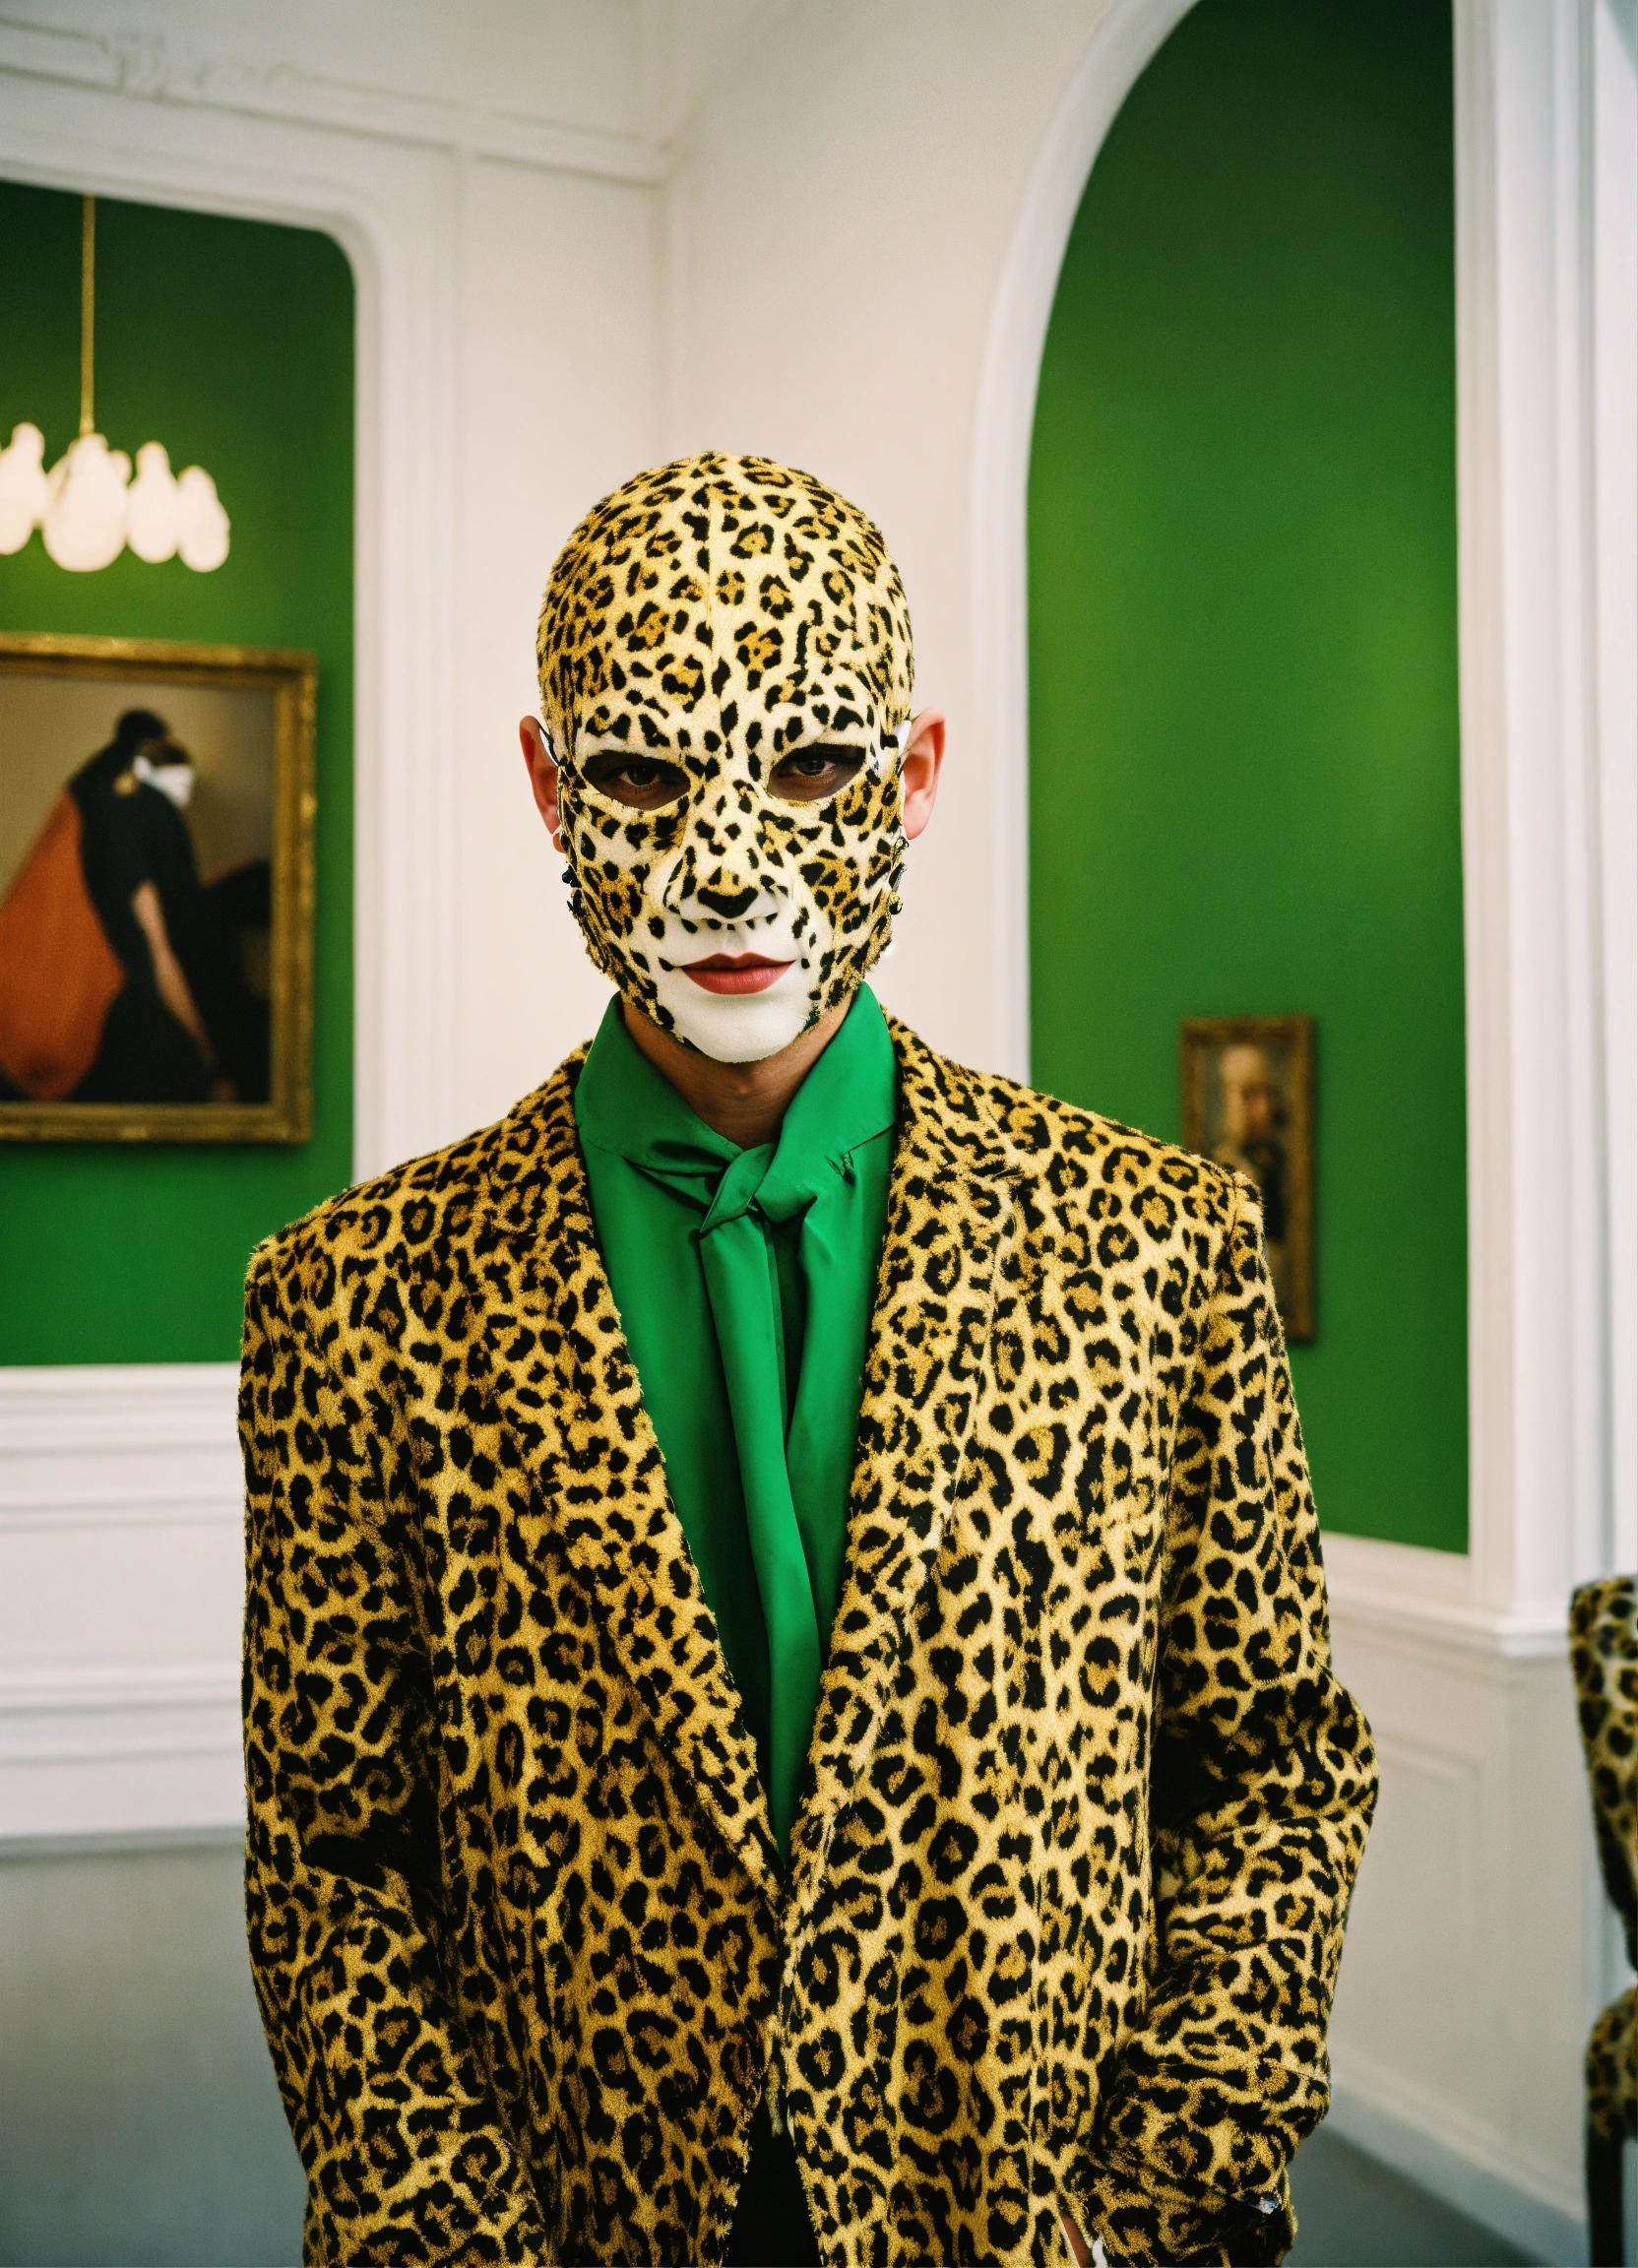 Lexica - Green bald Stanley ipkiss the mask 1994, ,parisian salon ...